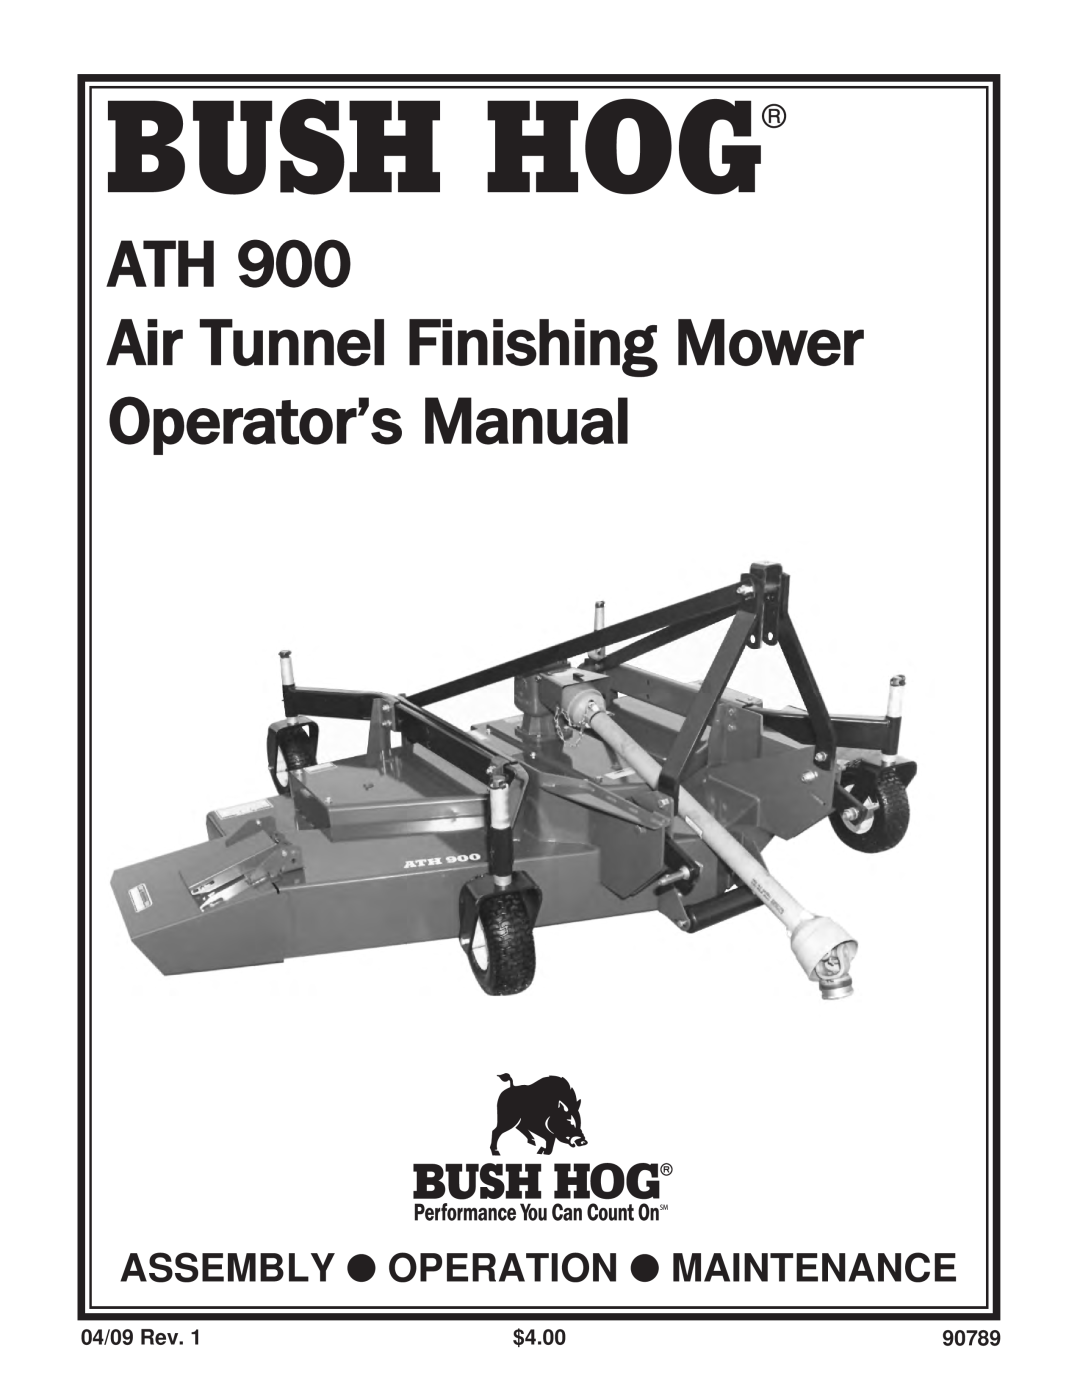 Bush Hog ATH 900 manual Bush Hog, ATH Air Tunnel Finishing Mower Operator’s Manual, Assembly Operation Maintenance 